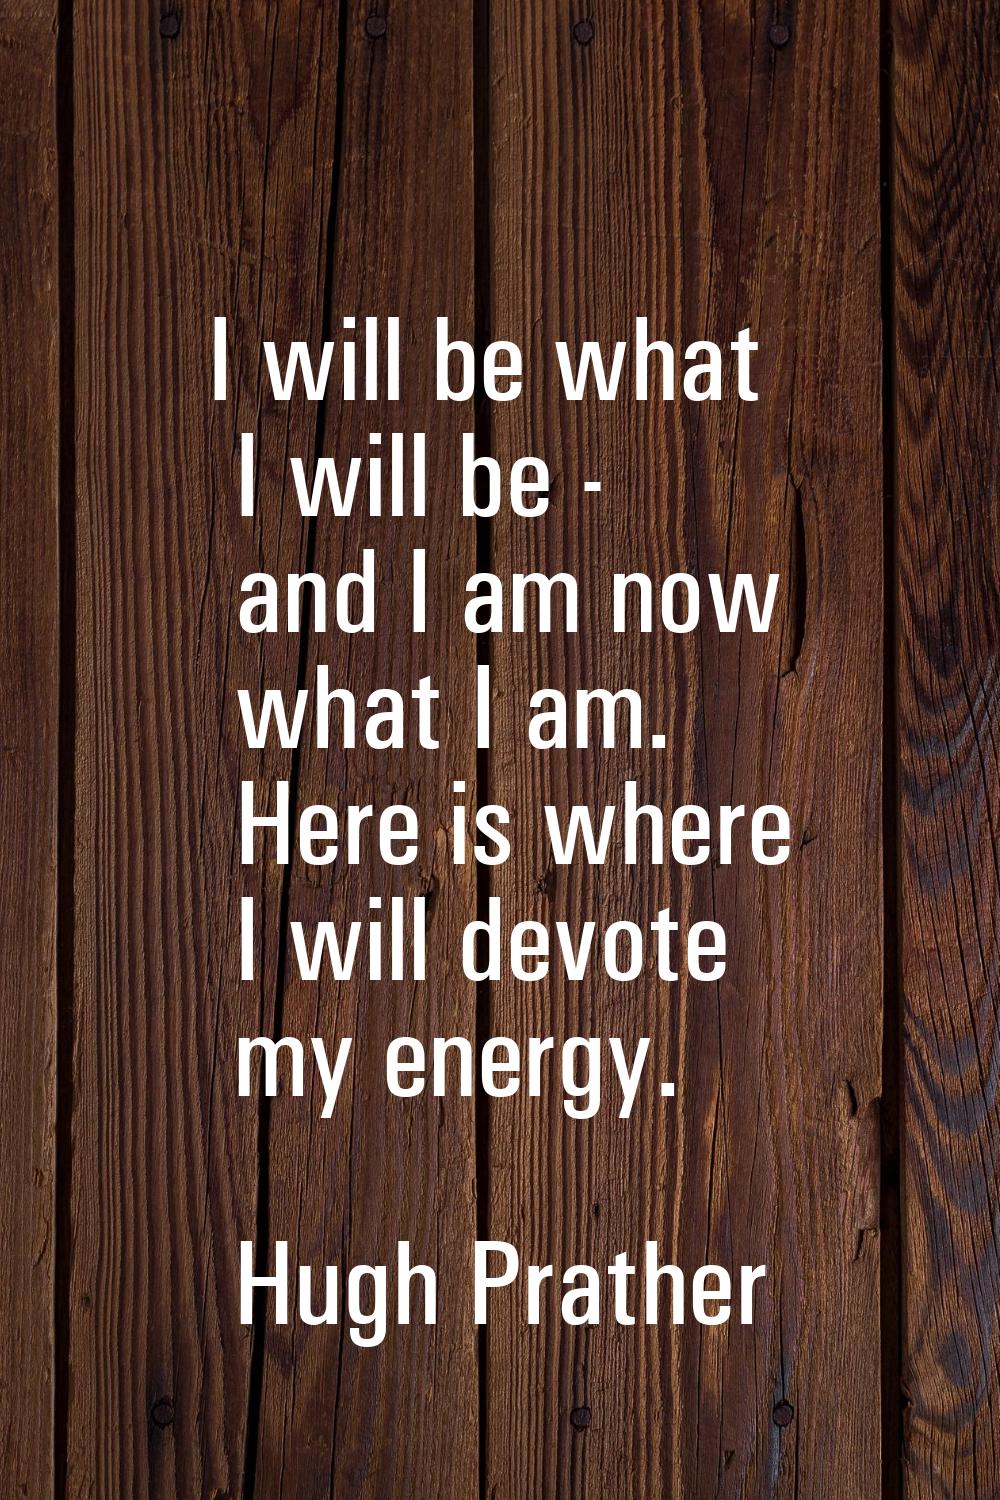 I will be what I will be - and I am now what I am. Here is where I will devote my energy.